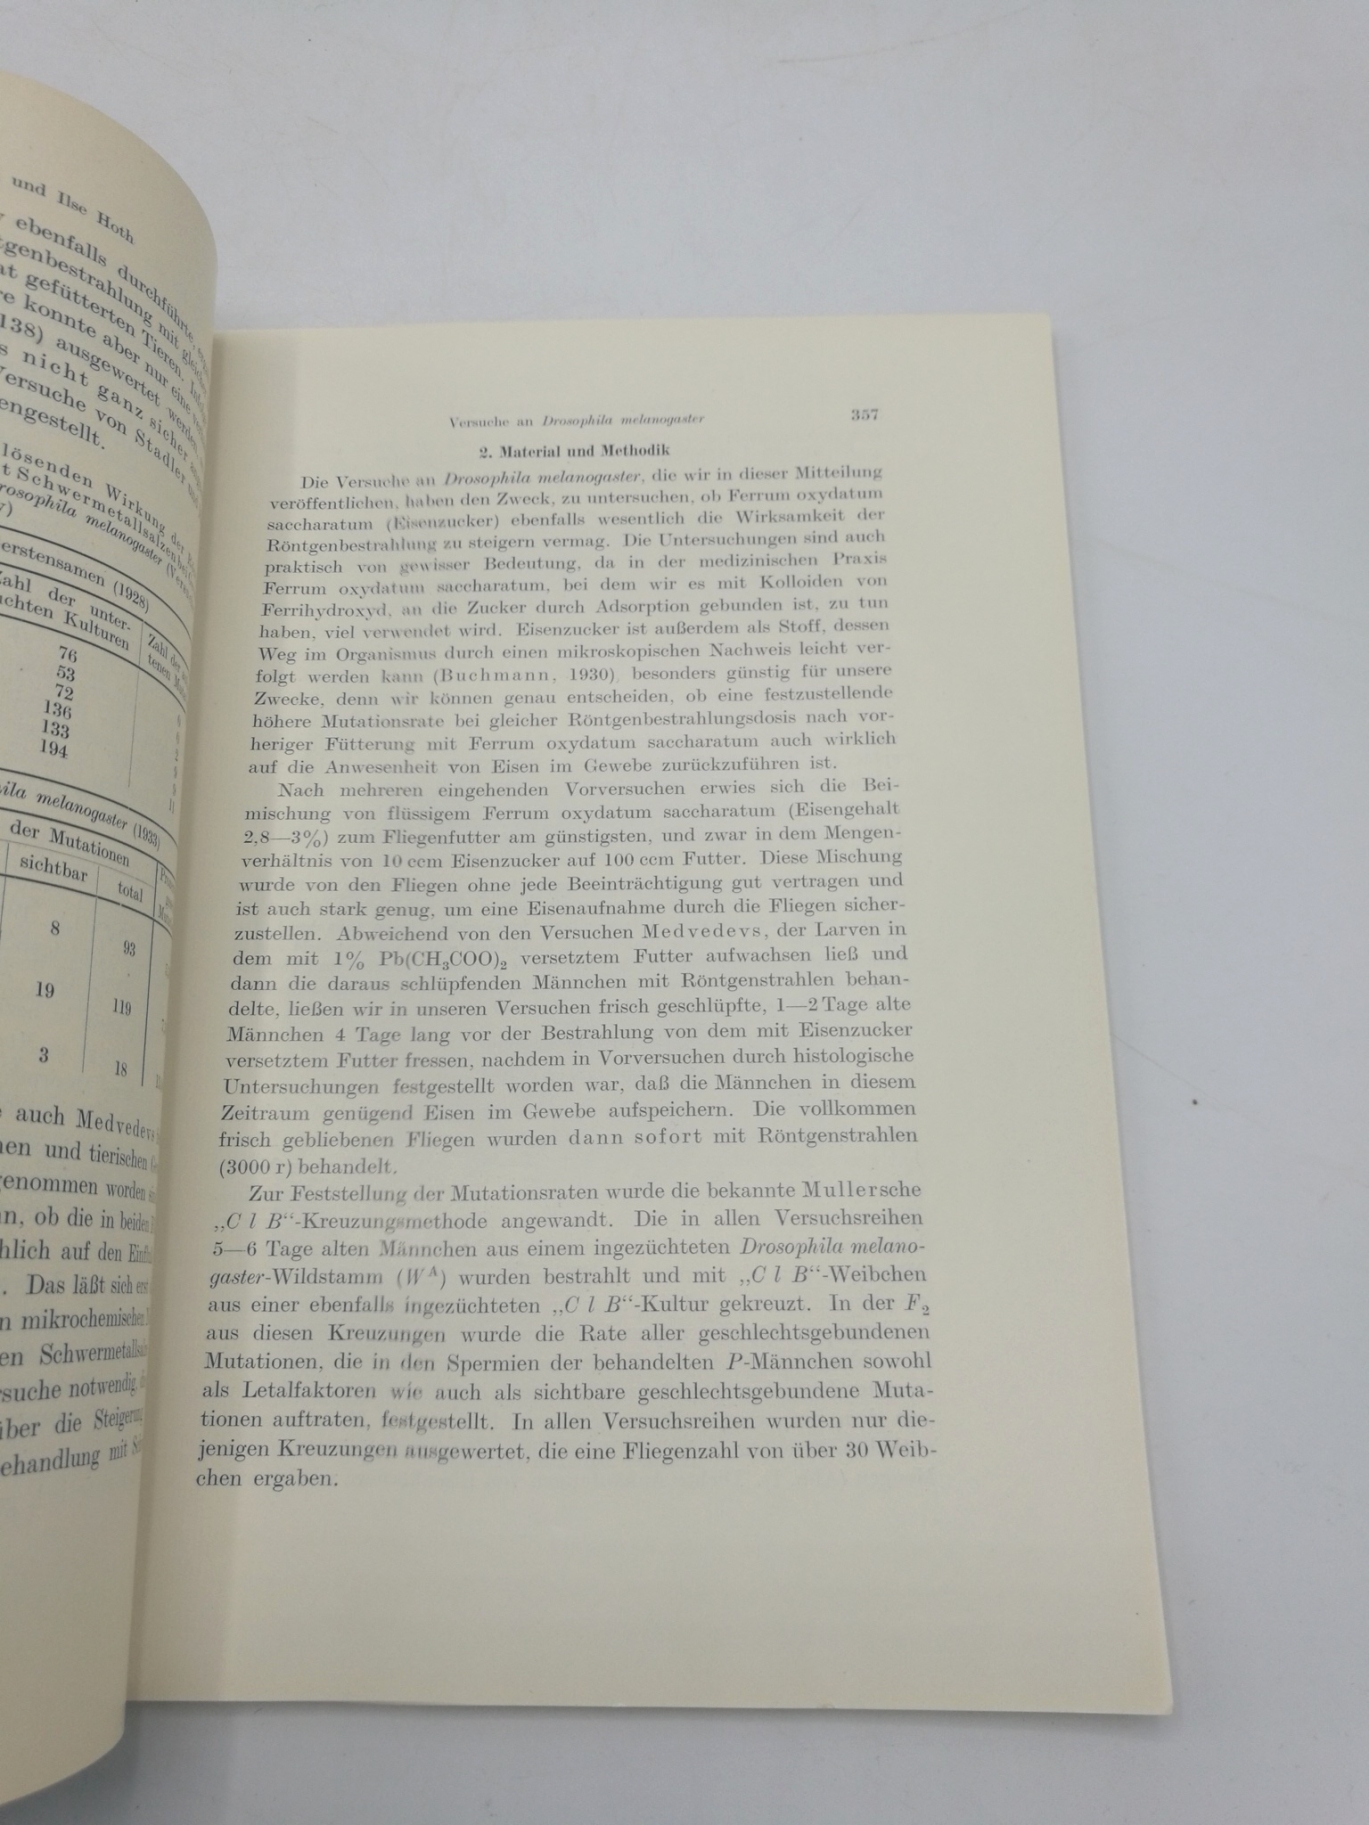 Butenandt et al (Hrsg.), A.: Biologisches Zentralblatt. 57. Band, Heft 7/8, 1937